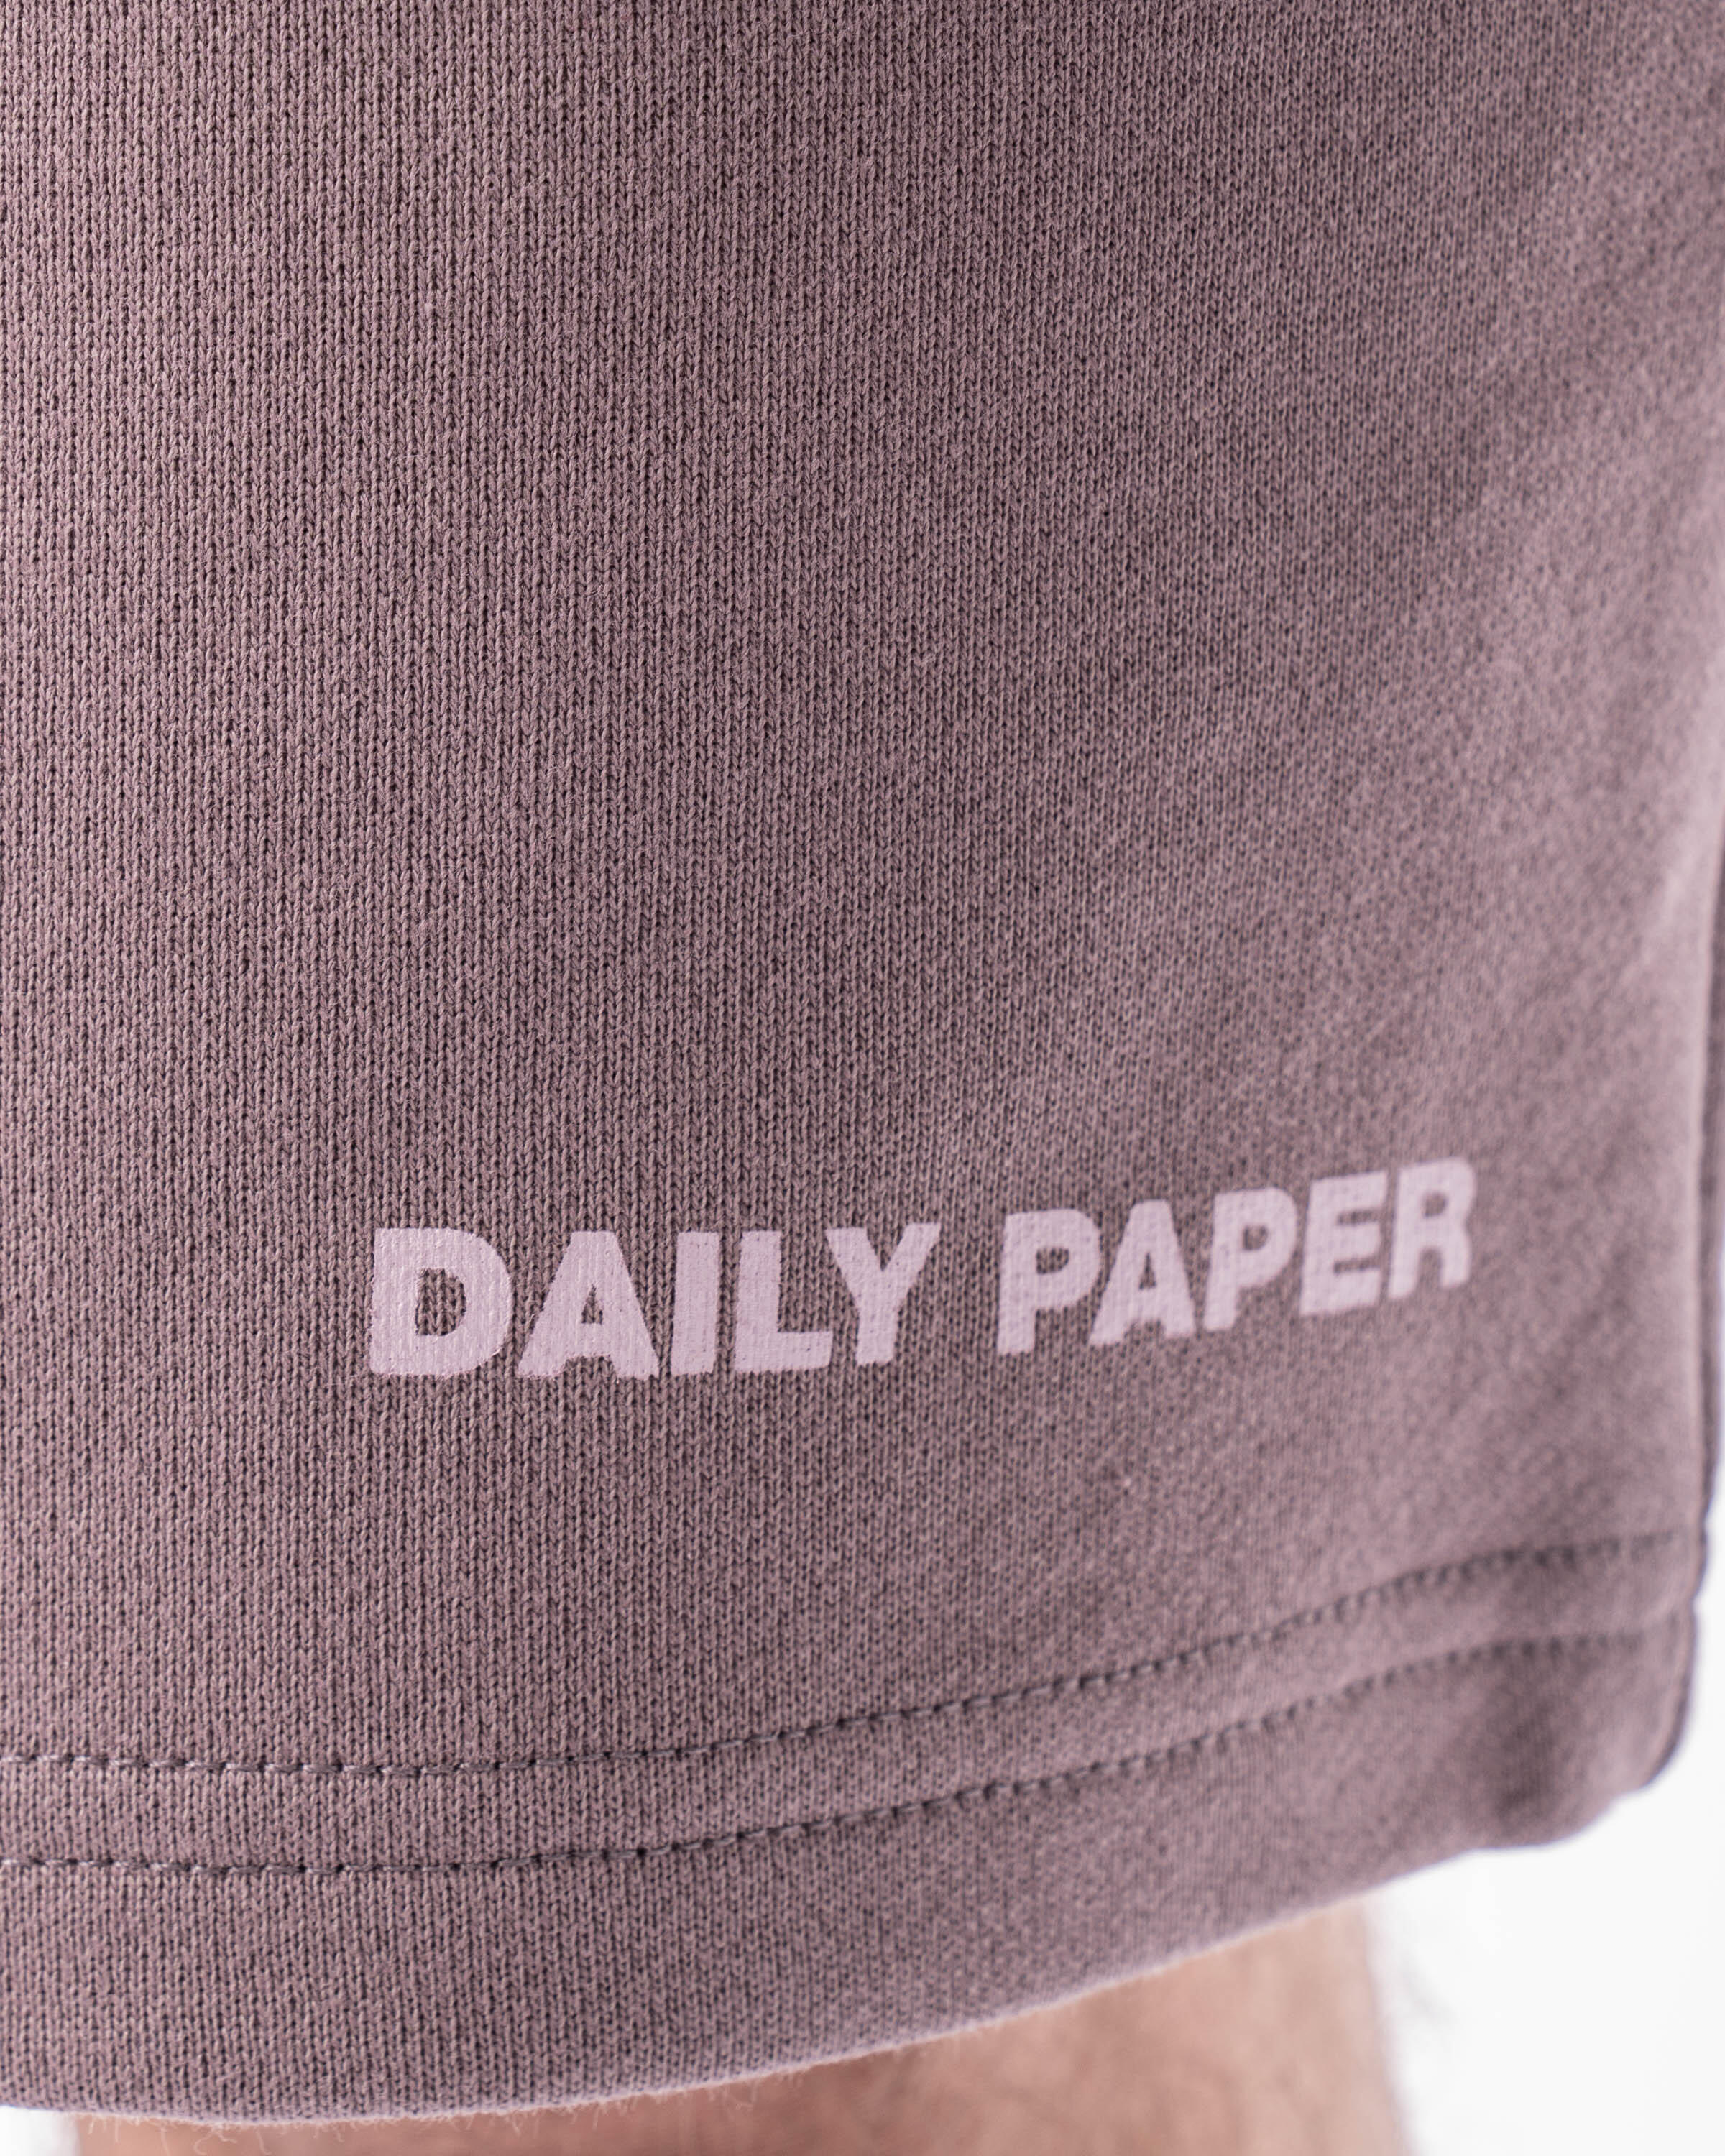 Daily Paper refarid shorts